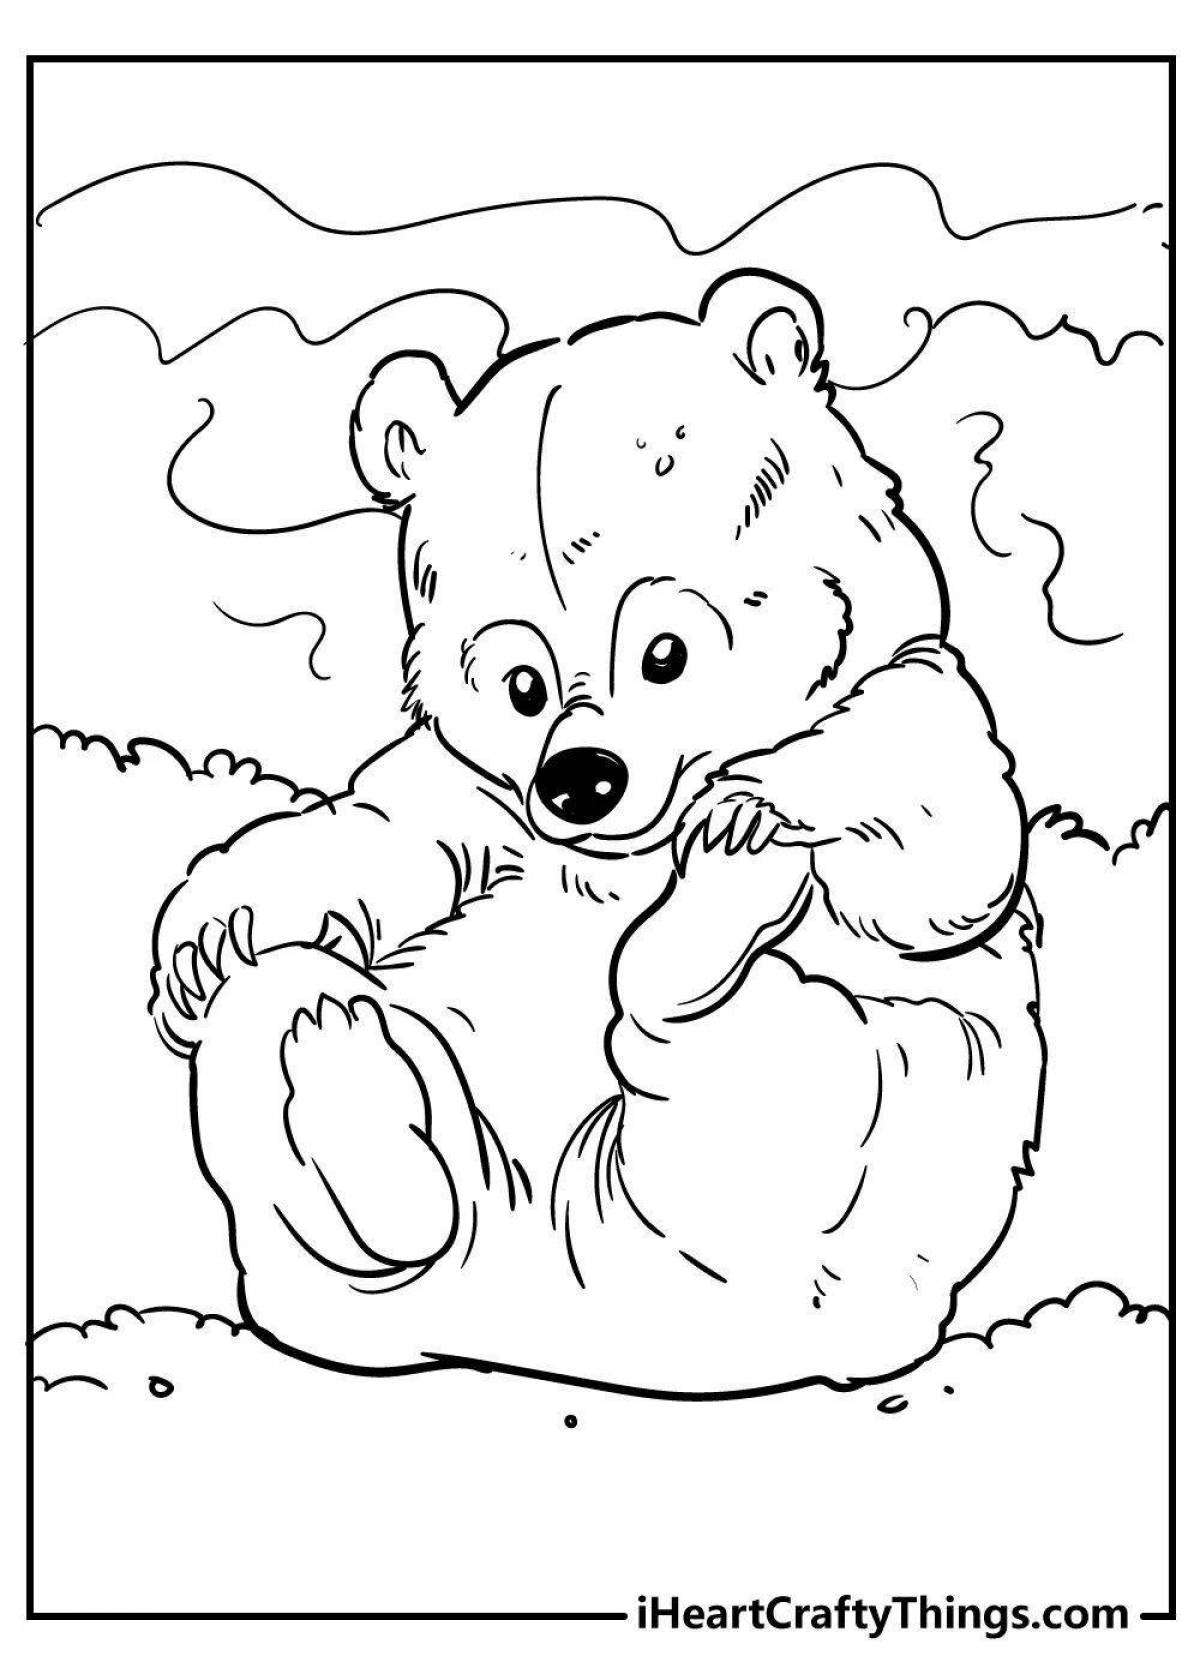 White polar bear coloring book for kids